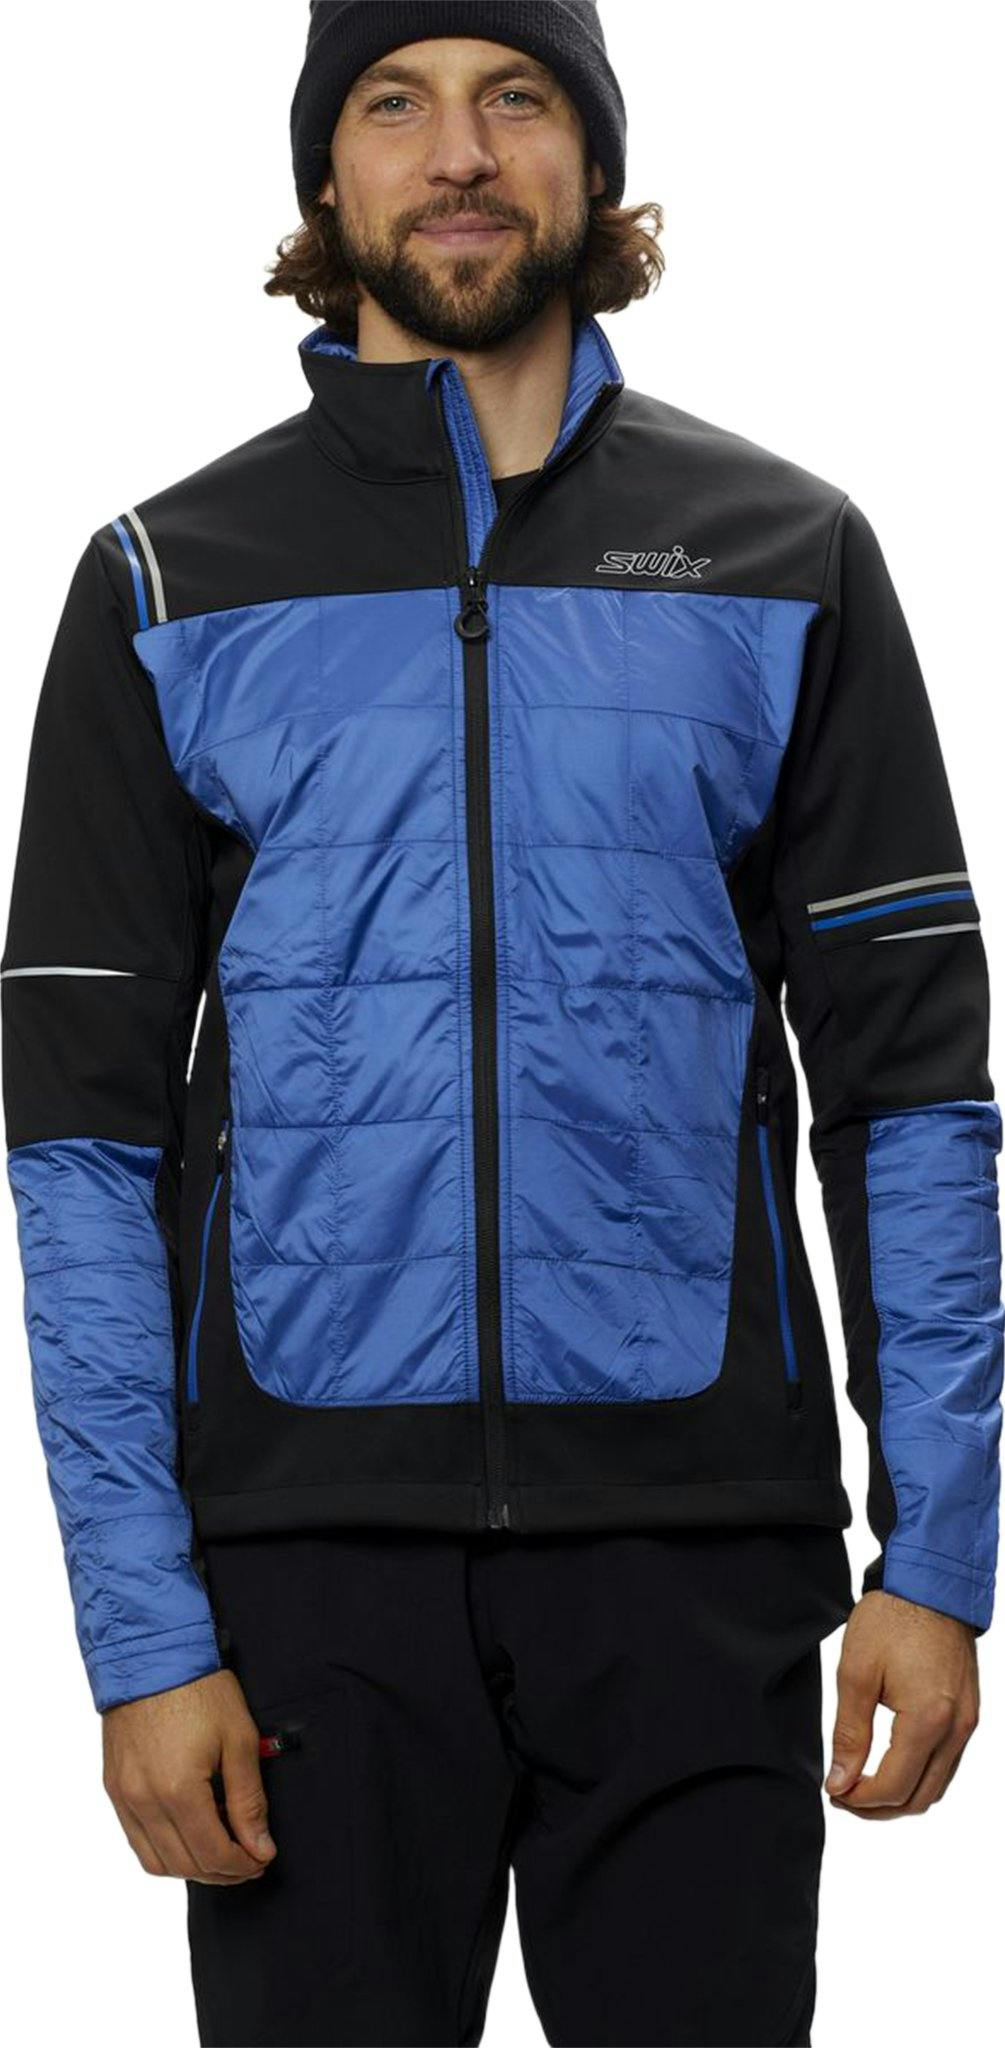 Product image for Navado Hybrid Jacket - Men's